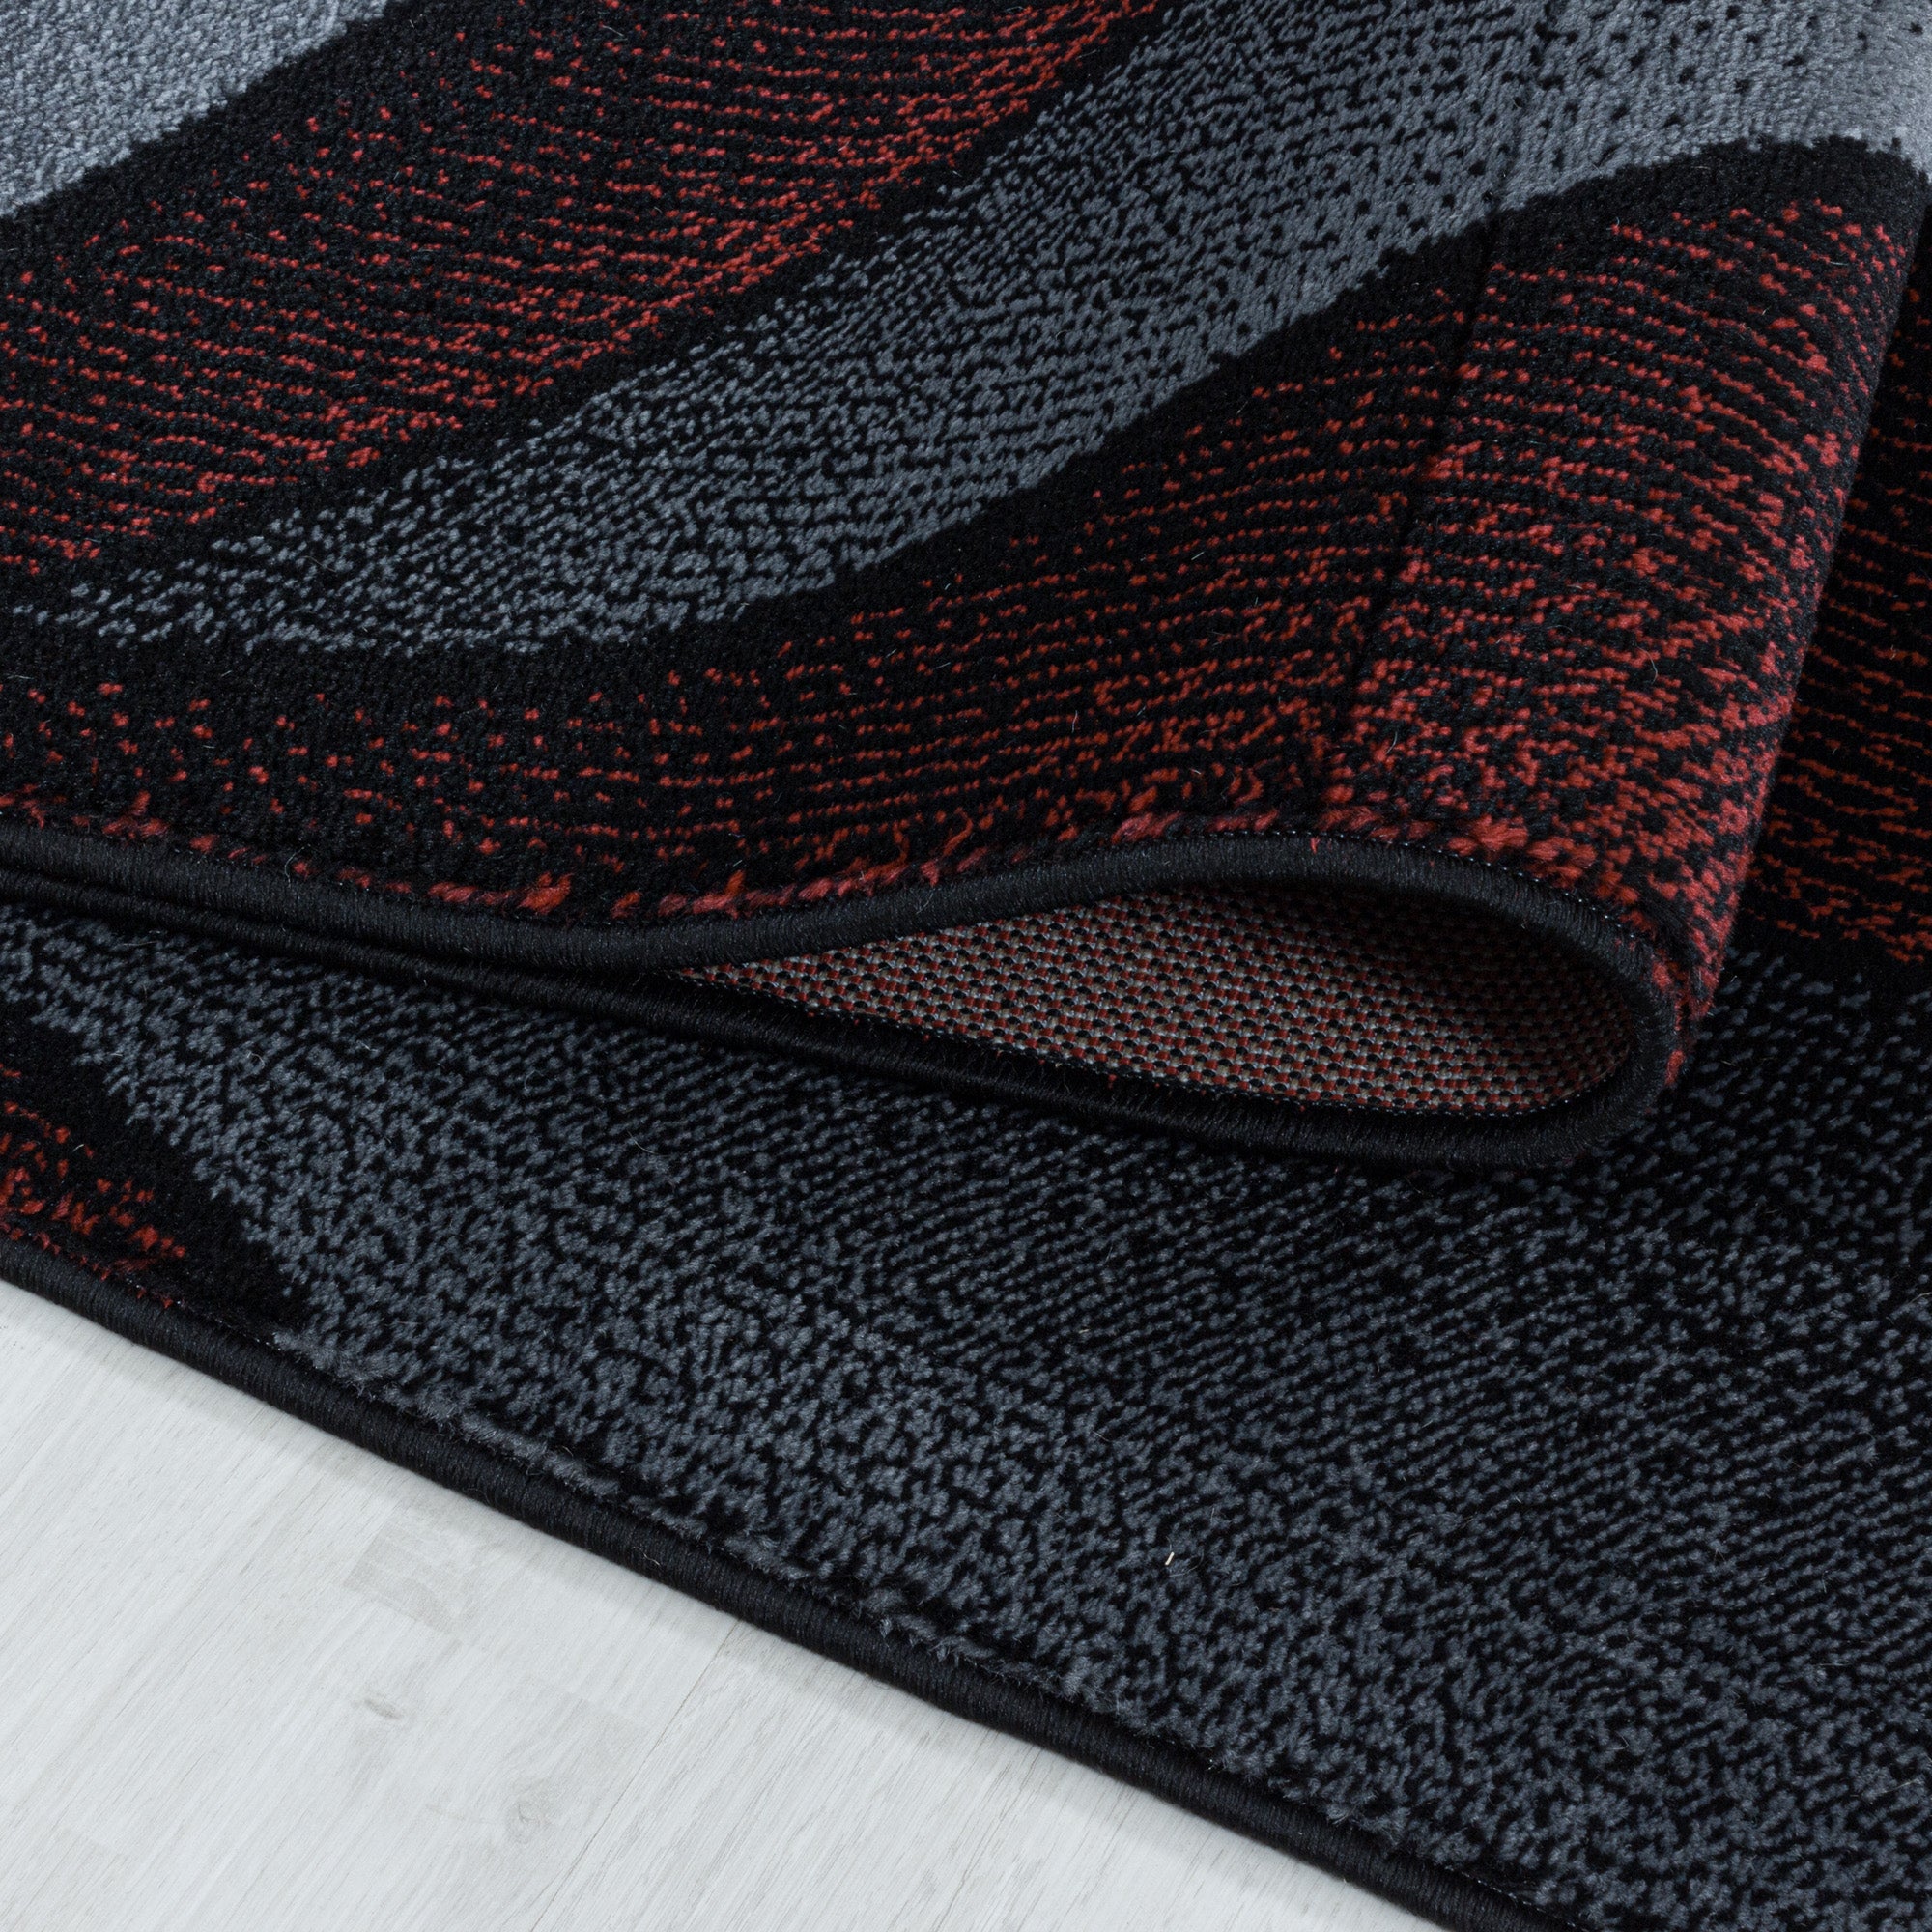 Kurzflor Design Teppich Wohnzimmerteppich 3-D Wellen Muster Soft Flor Rot